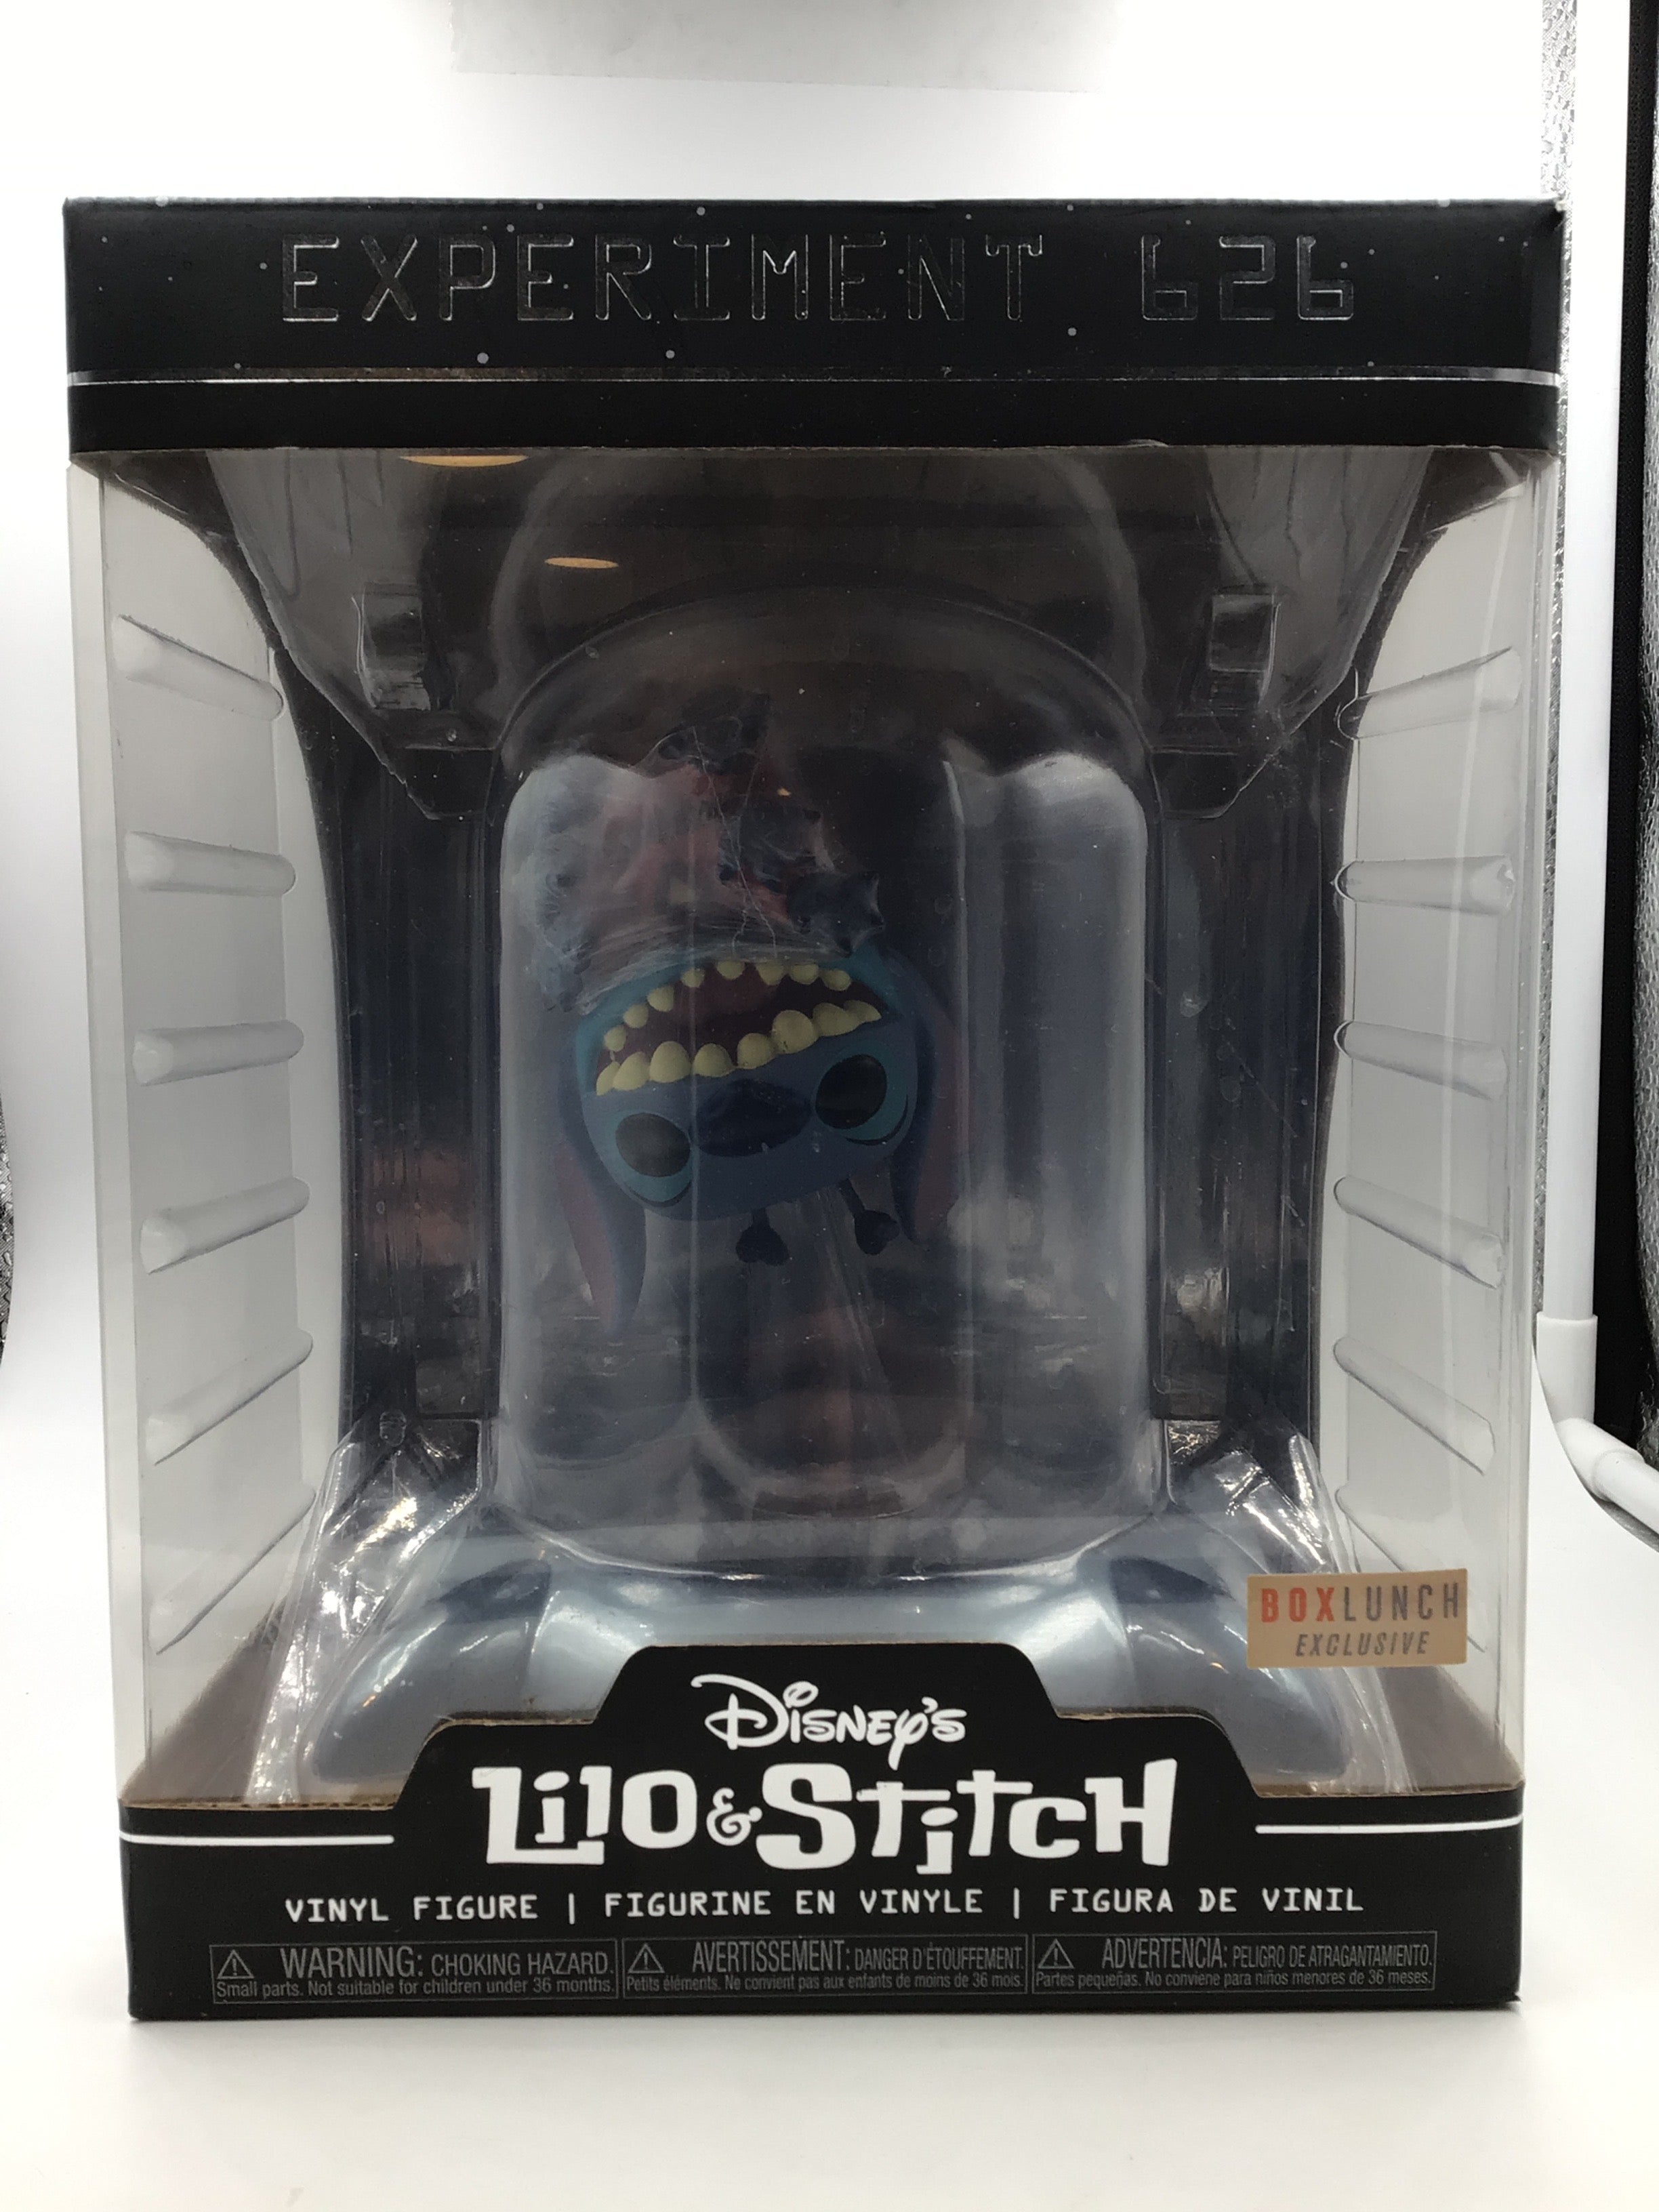 Disney's Stitch: Experiment 626 [36] 100% PS2 Longplay 